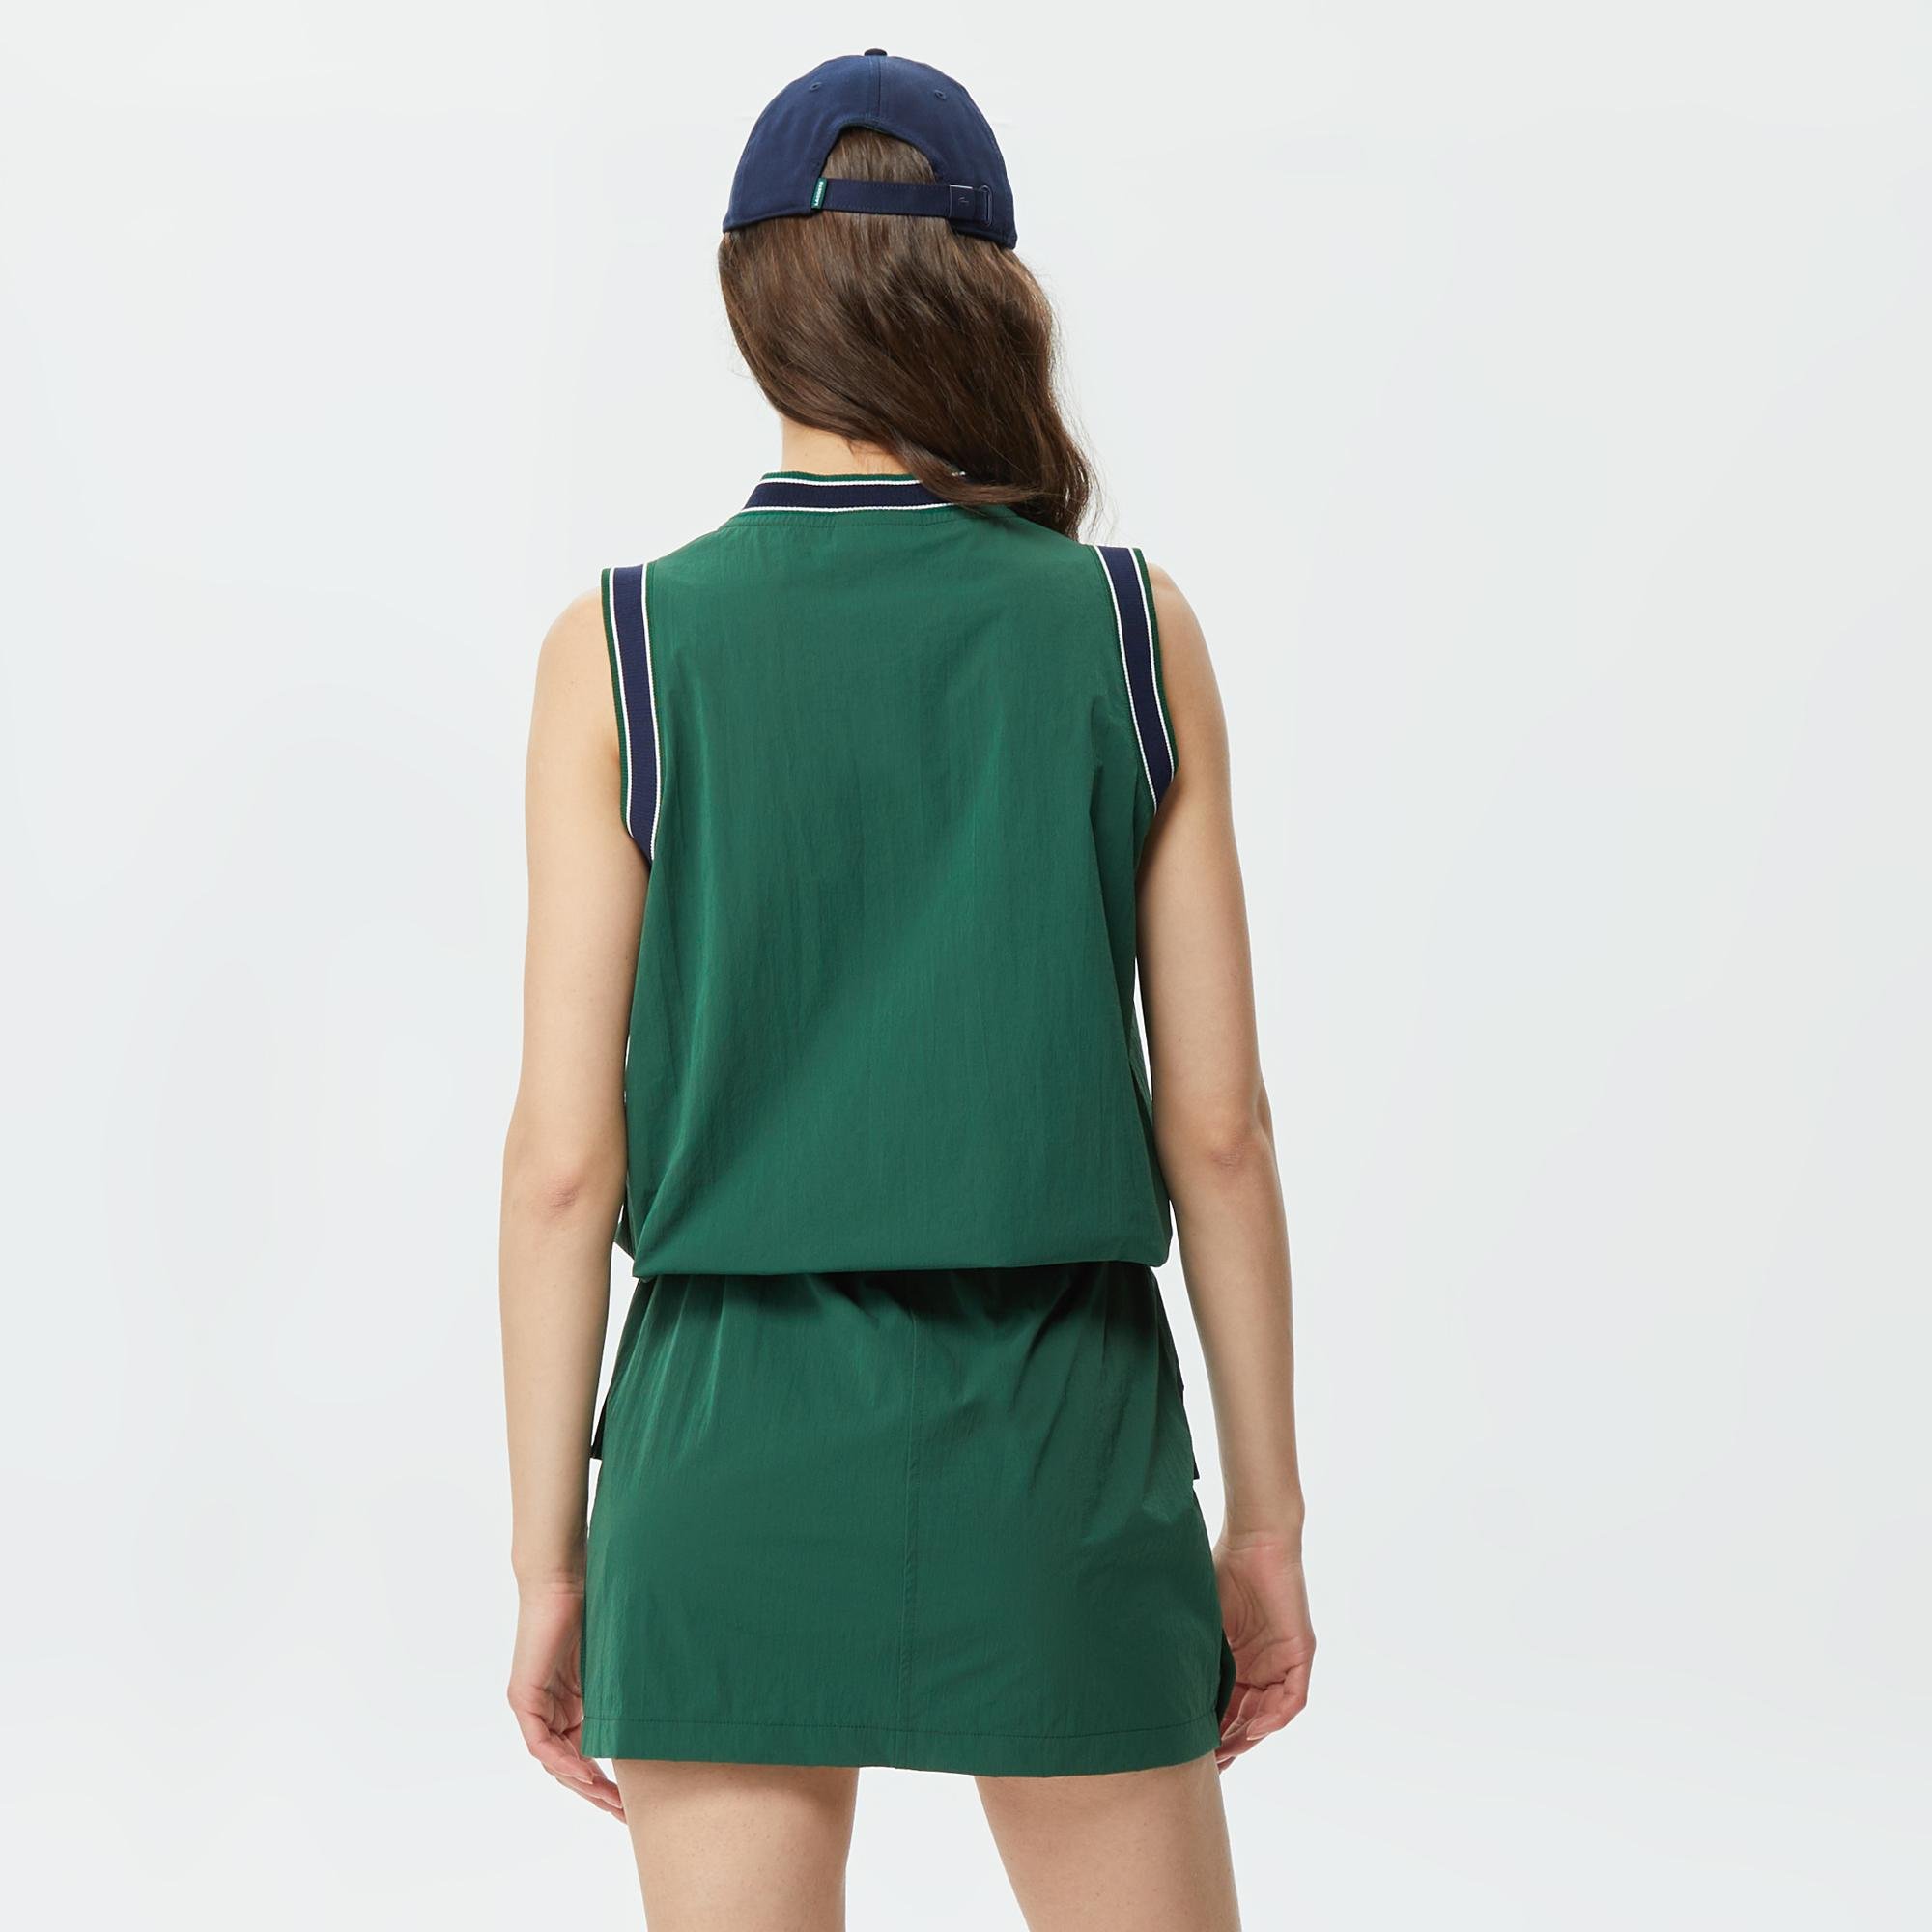 Lacoste Kadın Relaxed Fit V Yaka Renk Bloklu Yeşil Bluz